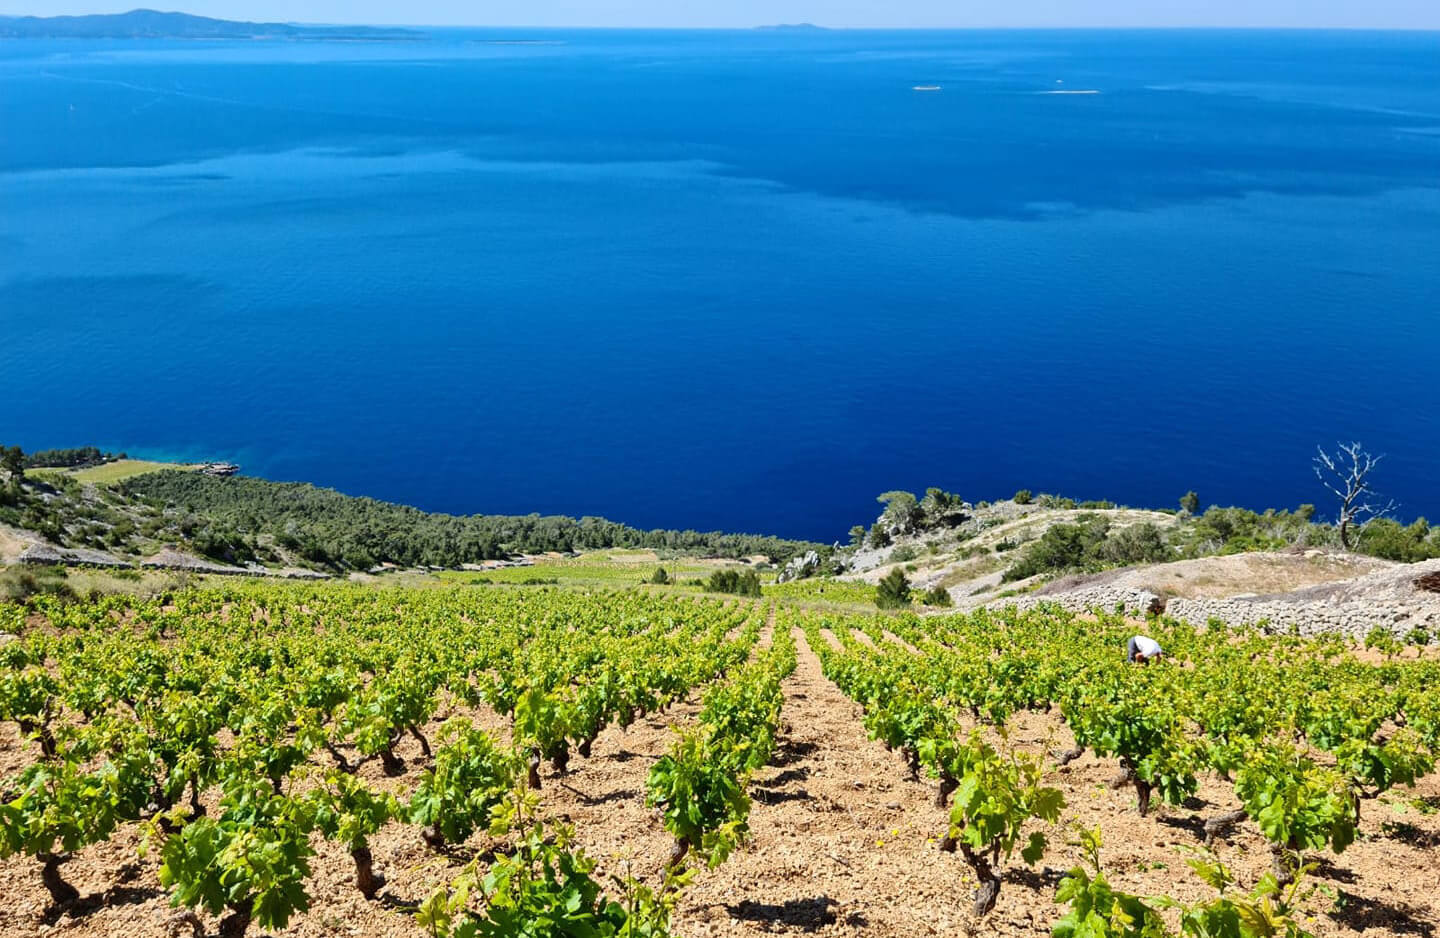 Image of vineyards in Sveta Nedjelja on Hvar island